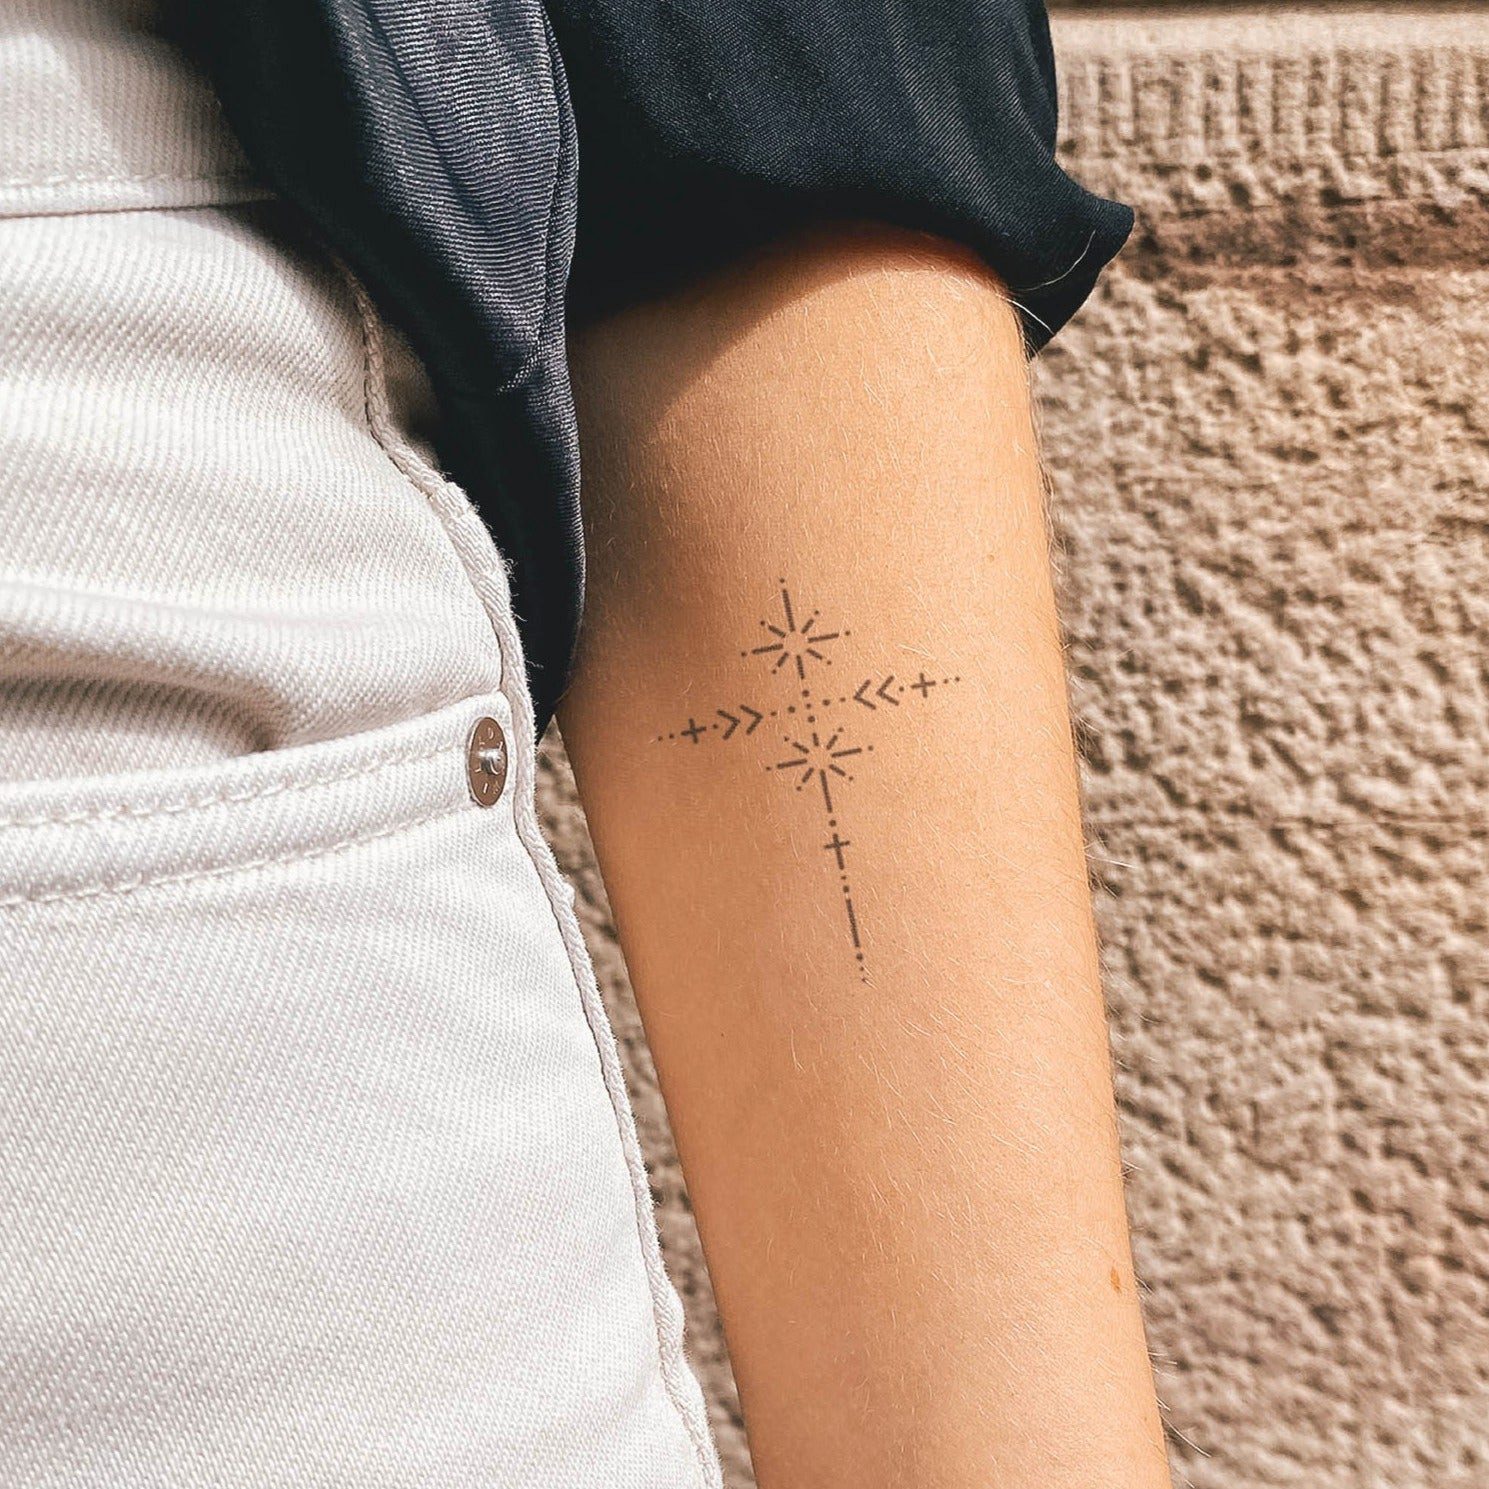 Inkster Schmuck-Tattoo aus 100% pflanzlicher Farbe - das Original - Eu Kosmetikzertifiziert